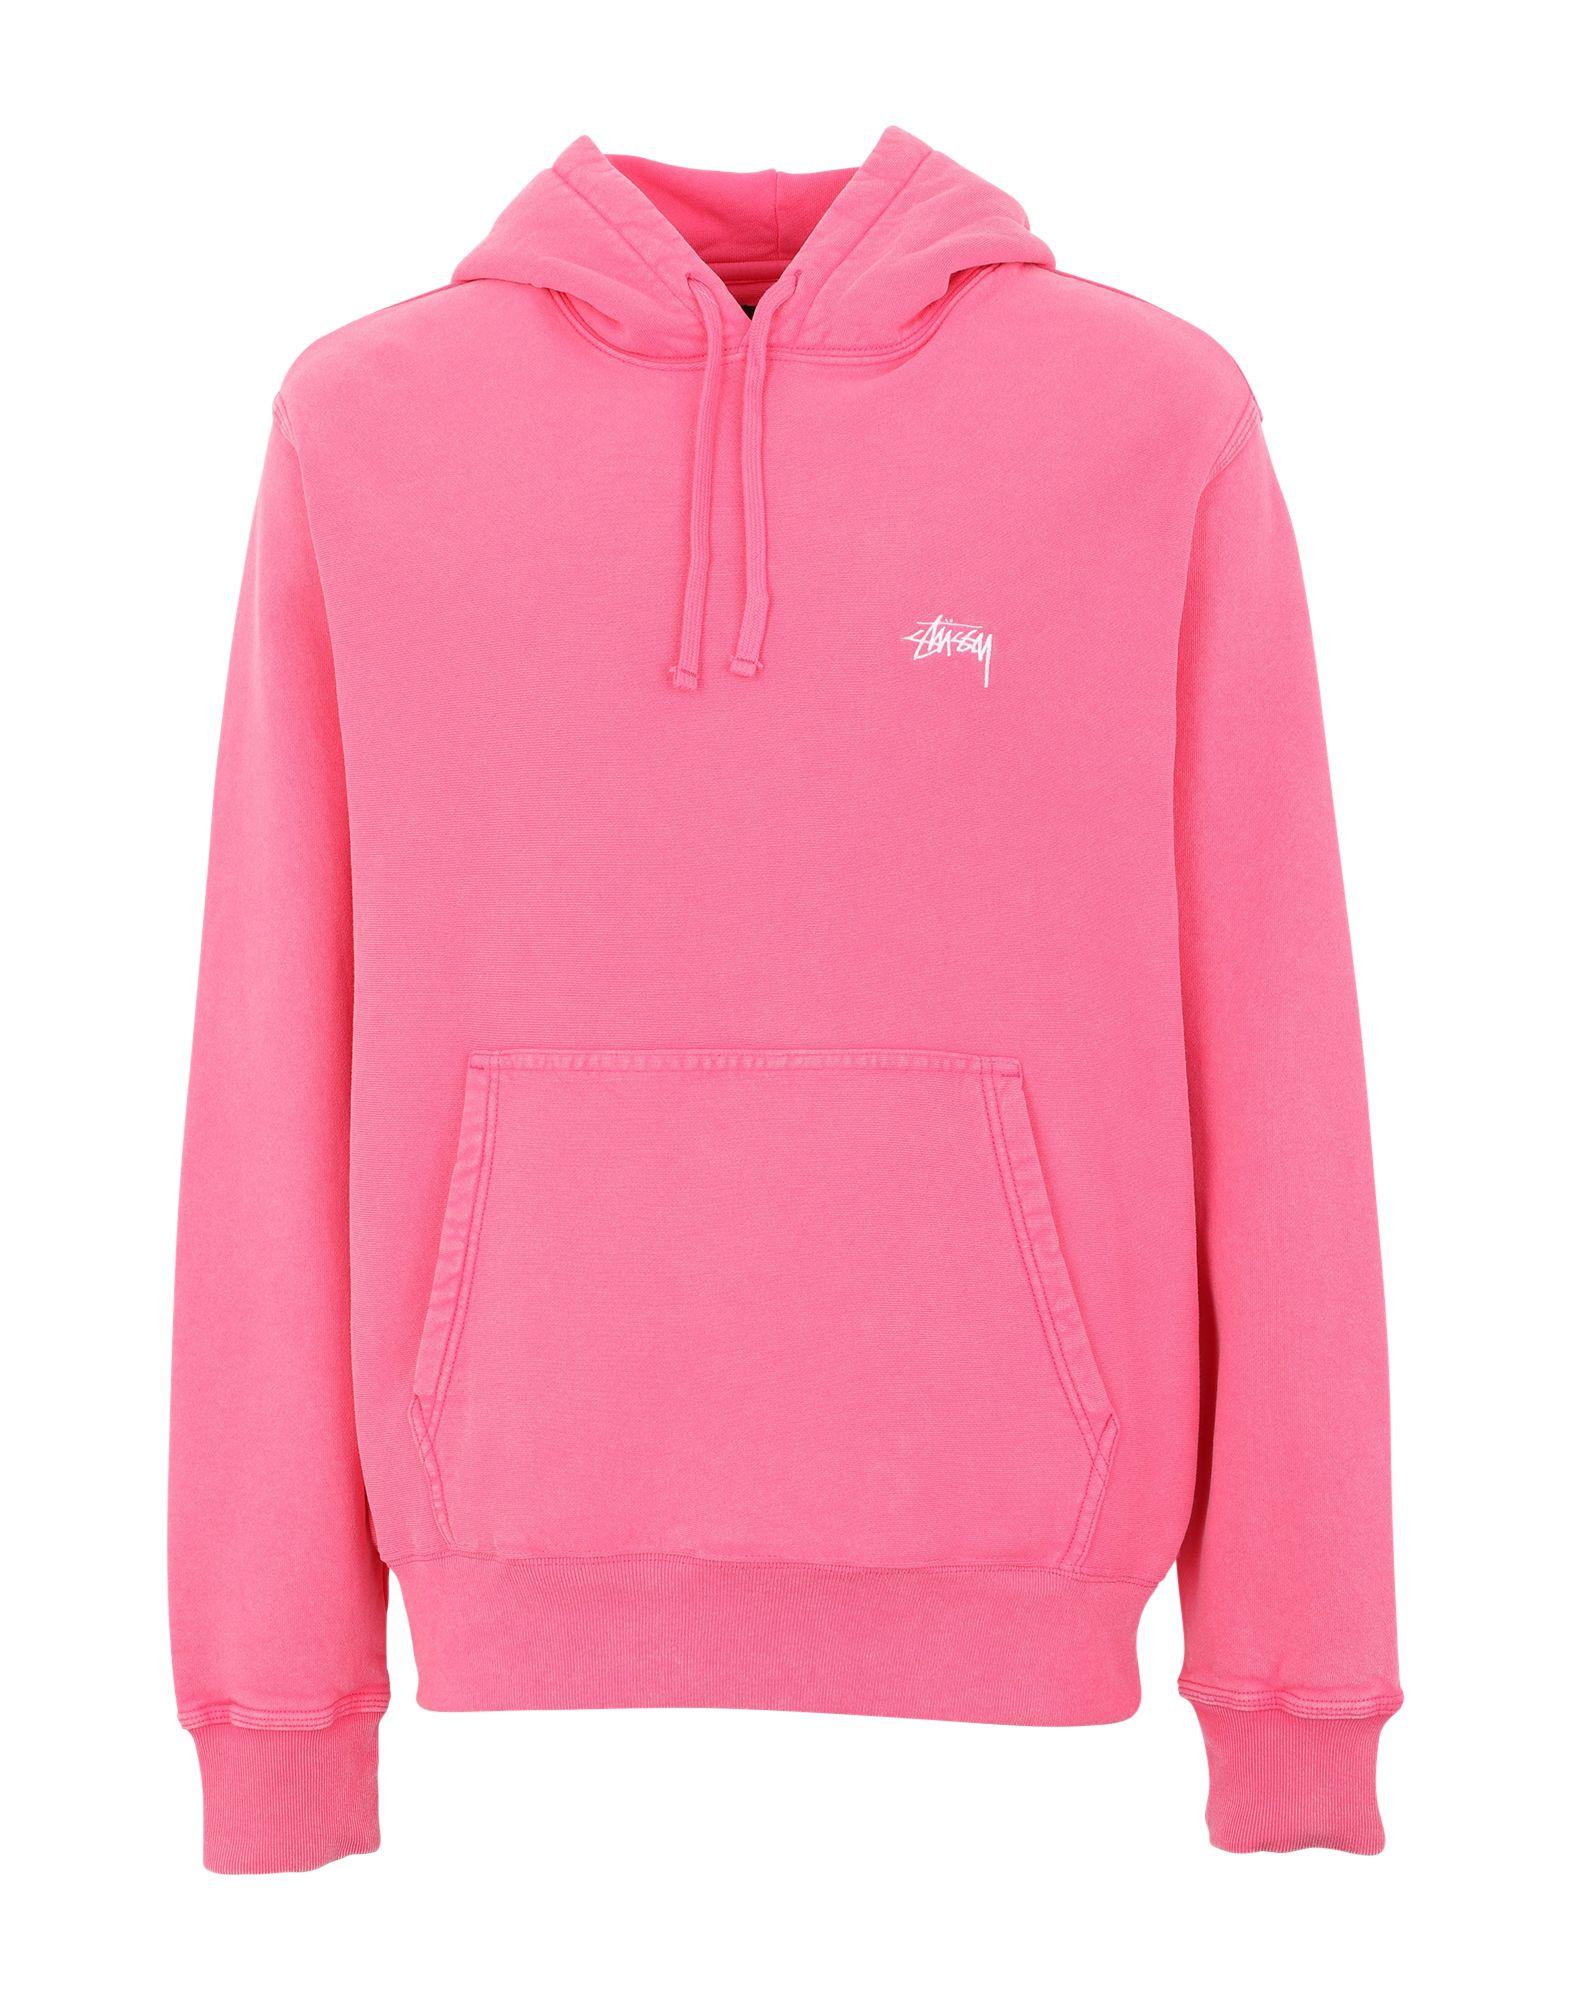 Stussy Fleece Sweatshirt in Pink for Men - Lyst